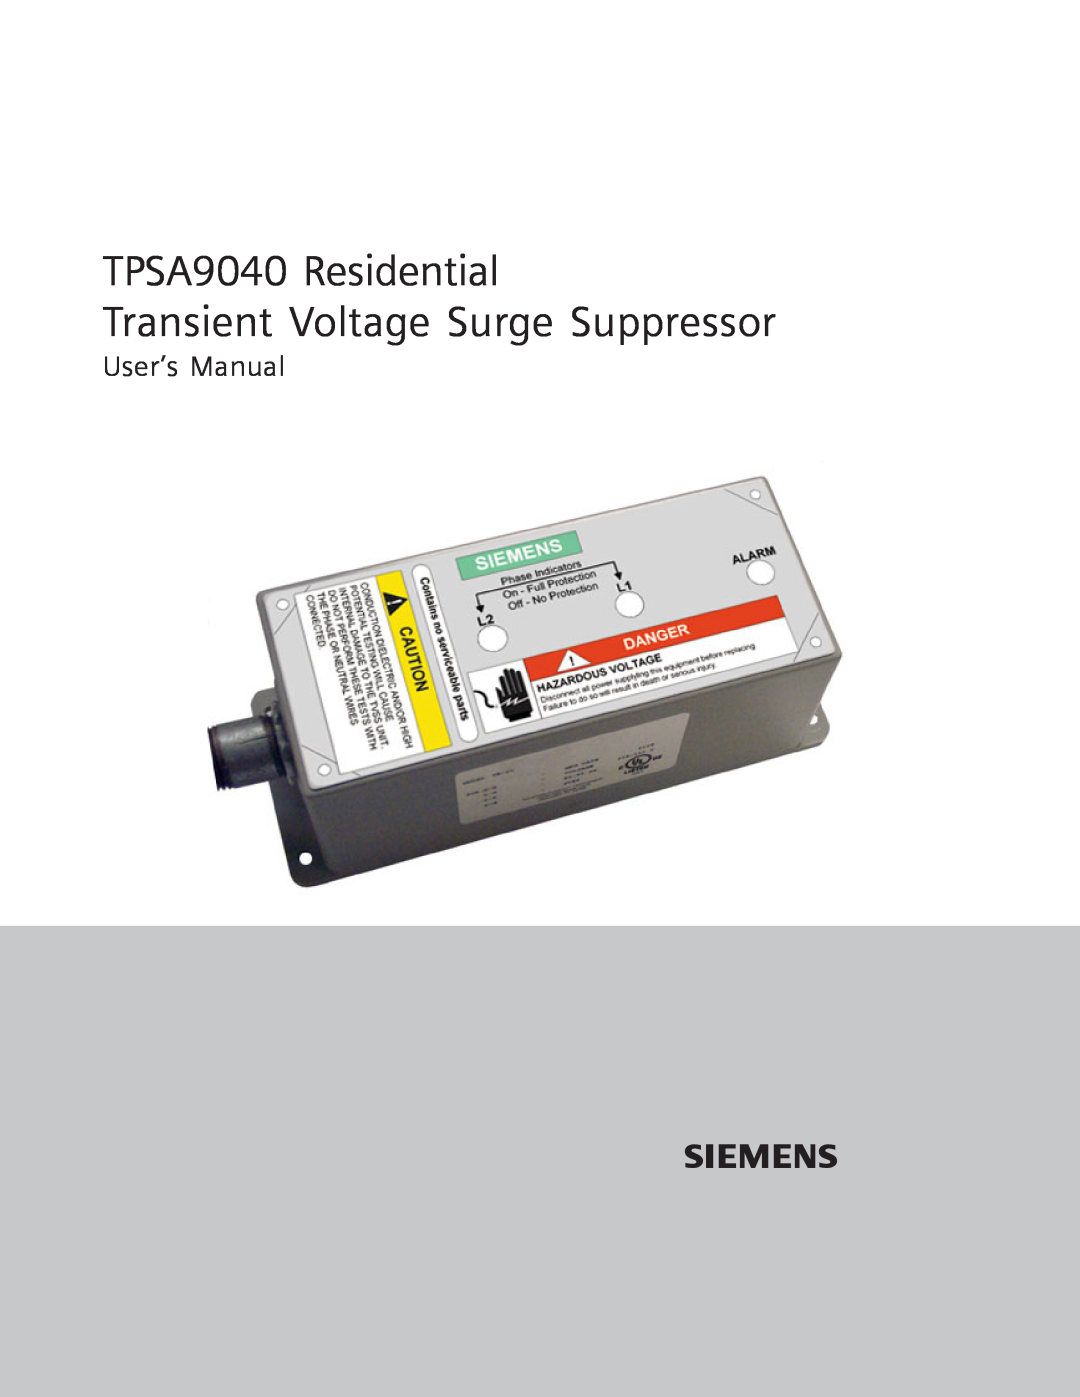 Siemens user manual TPSA9040 Residential Transient Voltage Surge Suppressor, User’s Manual 